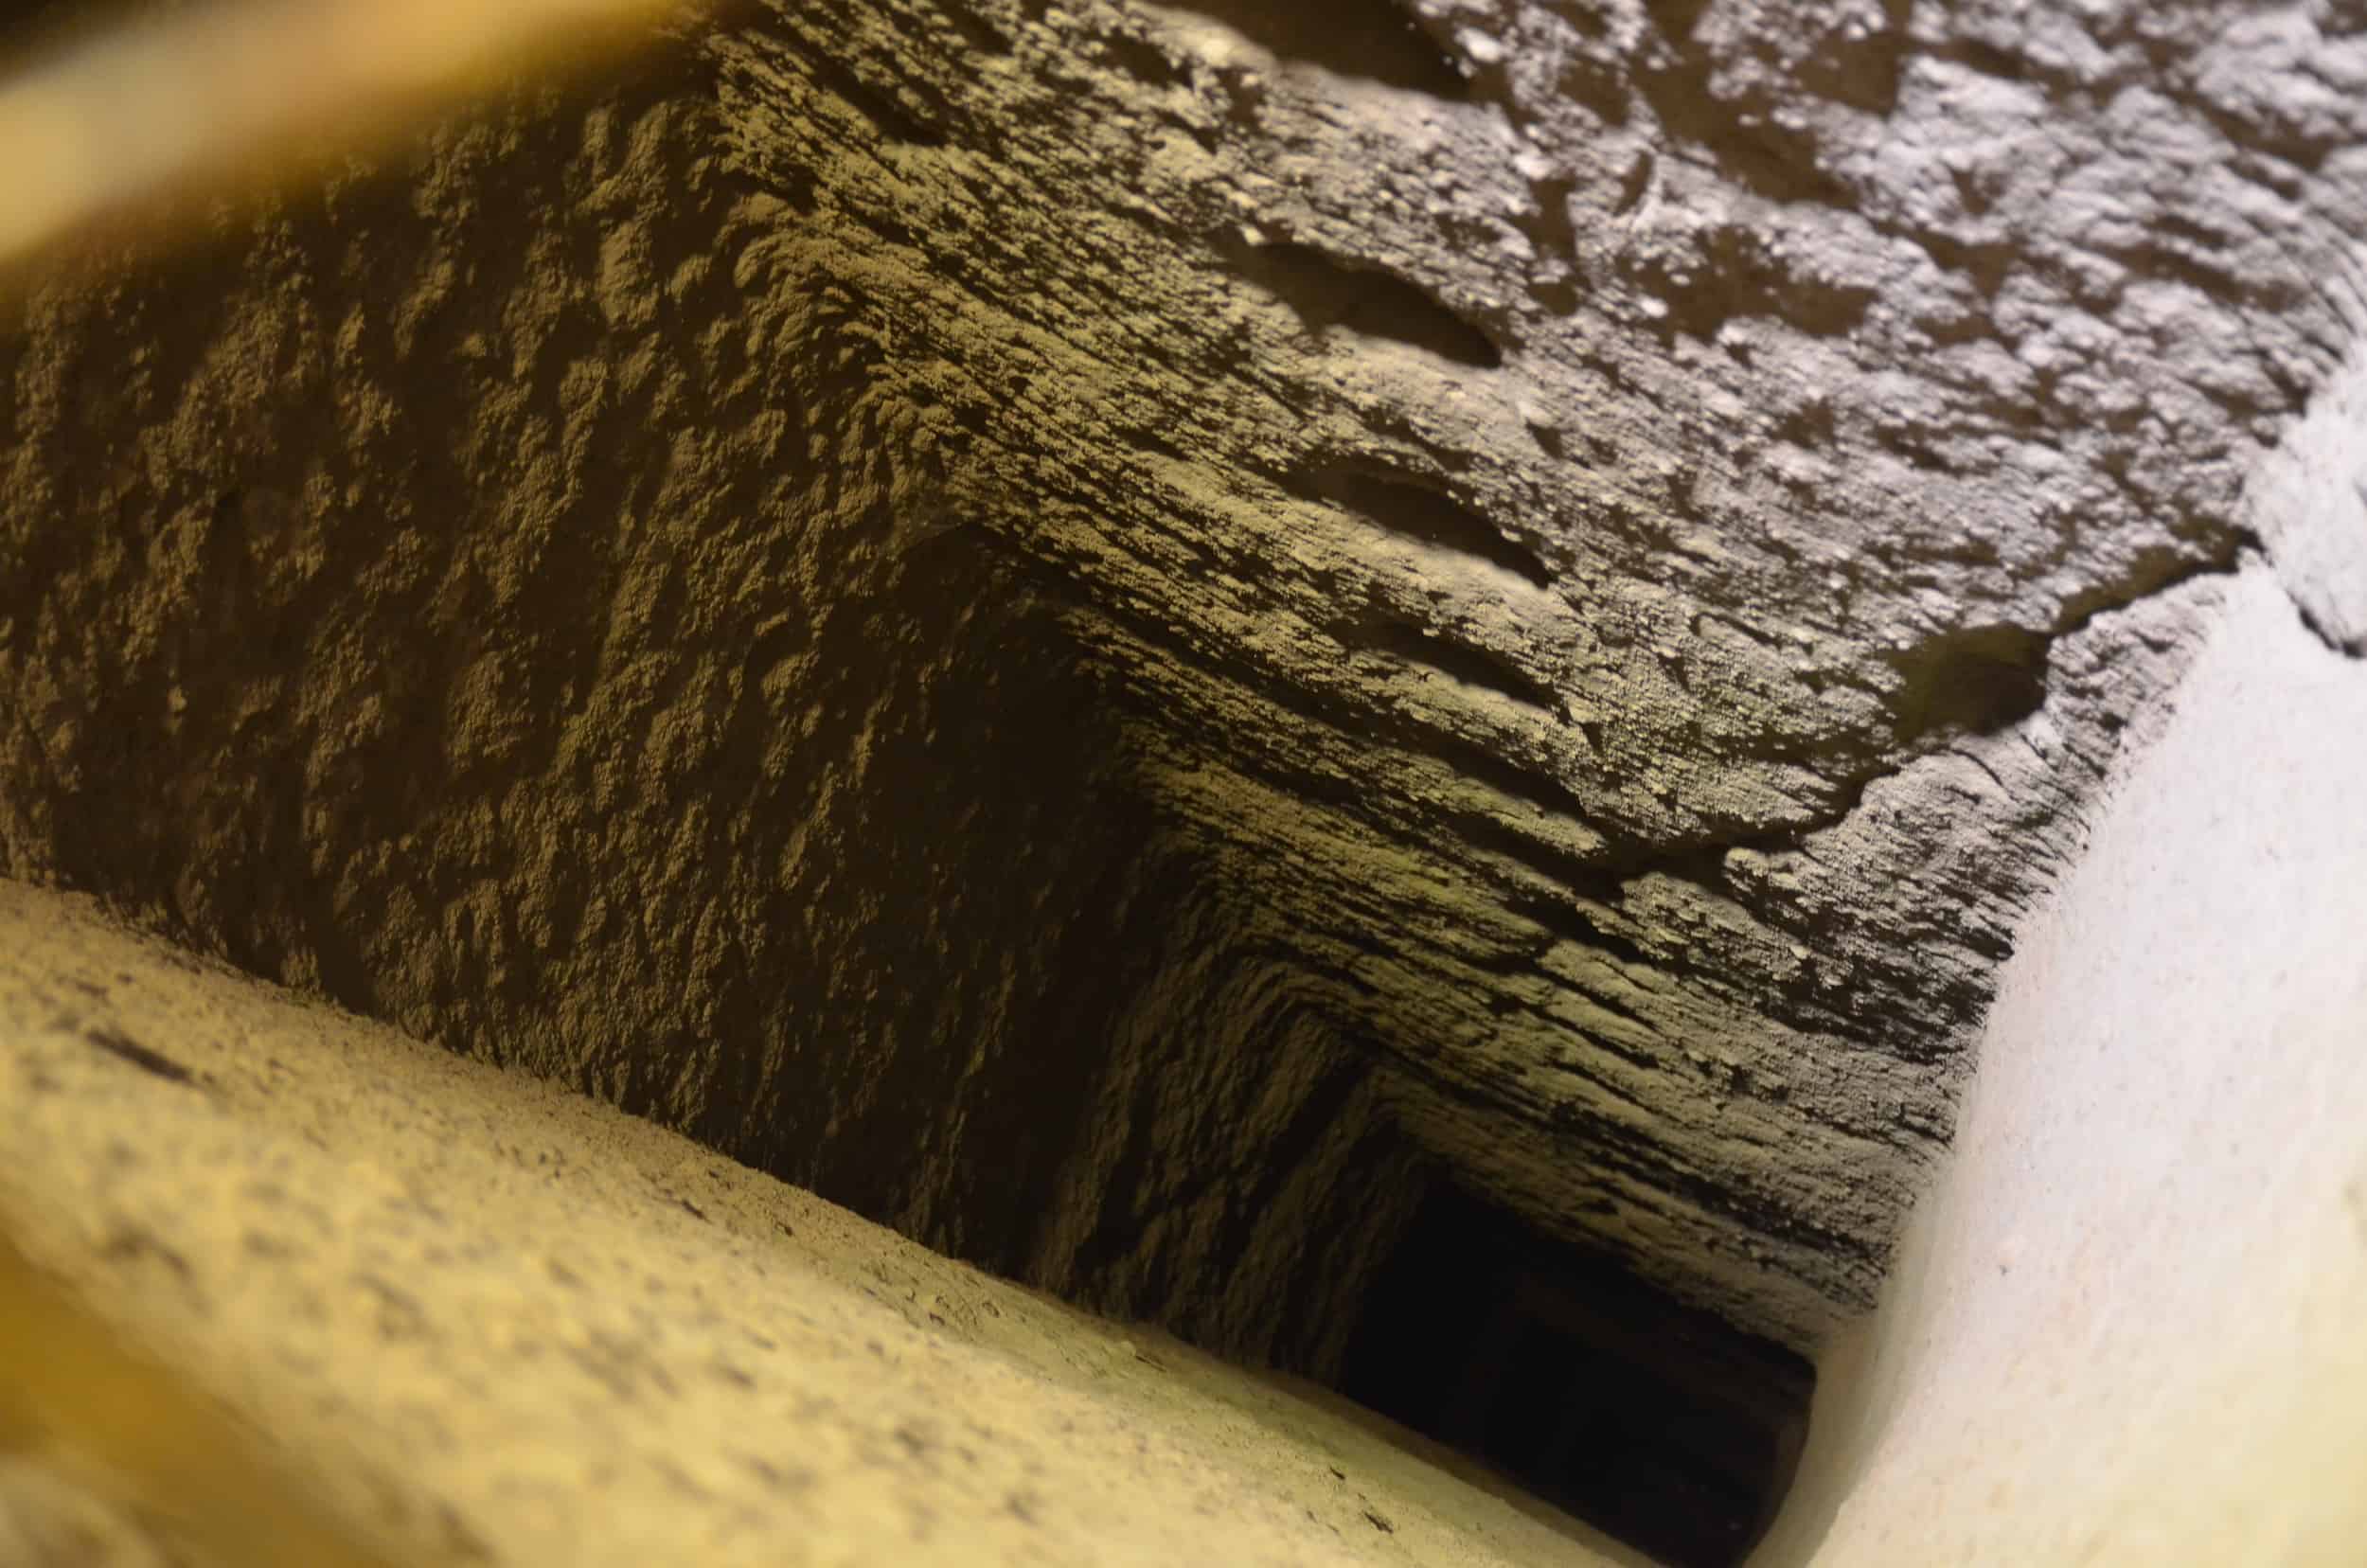 Ventilation shaft at Kaymaklı Underground City in Cappadocia, Turkey